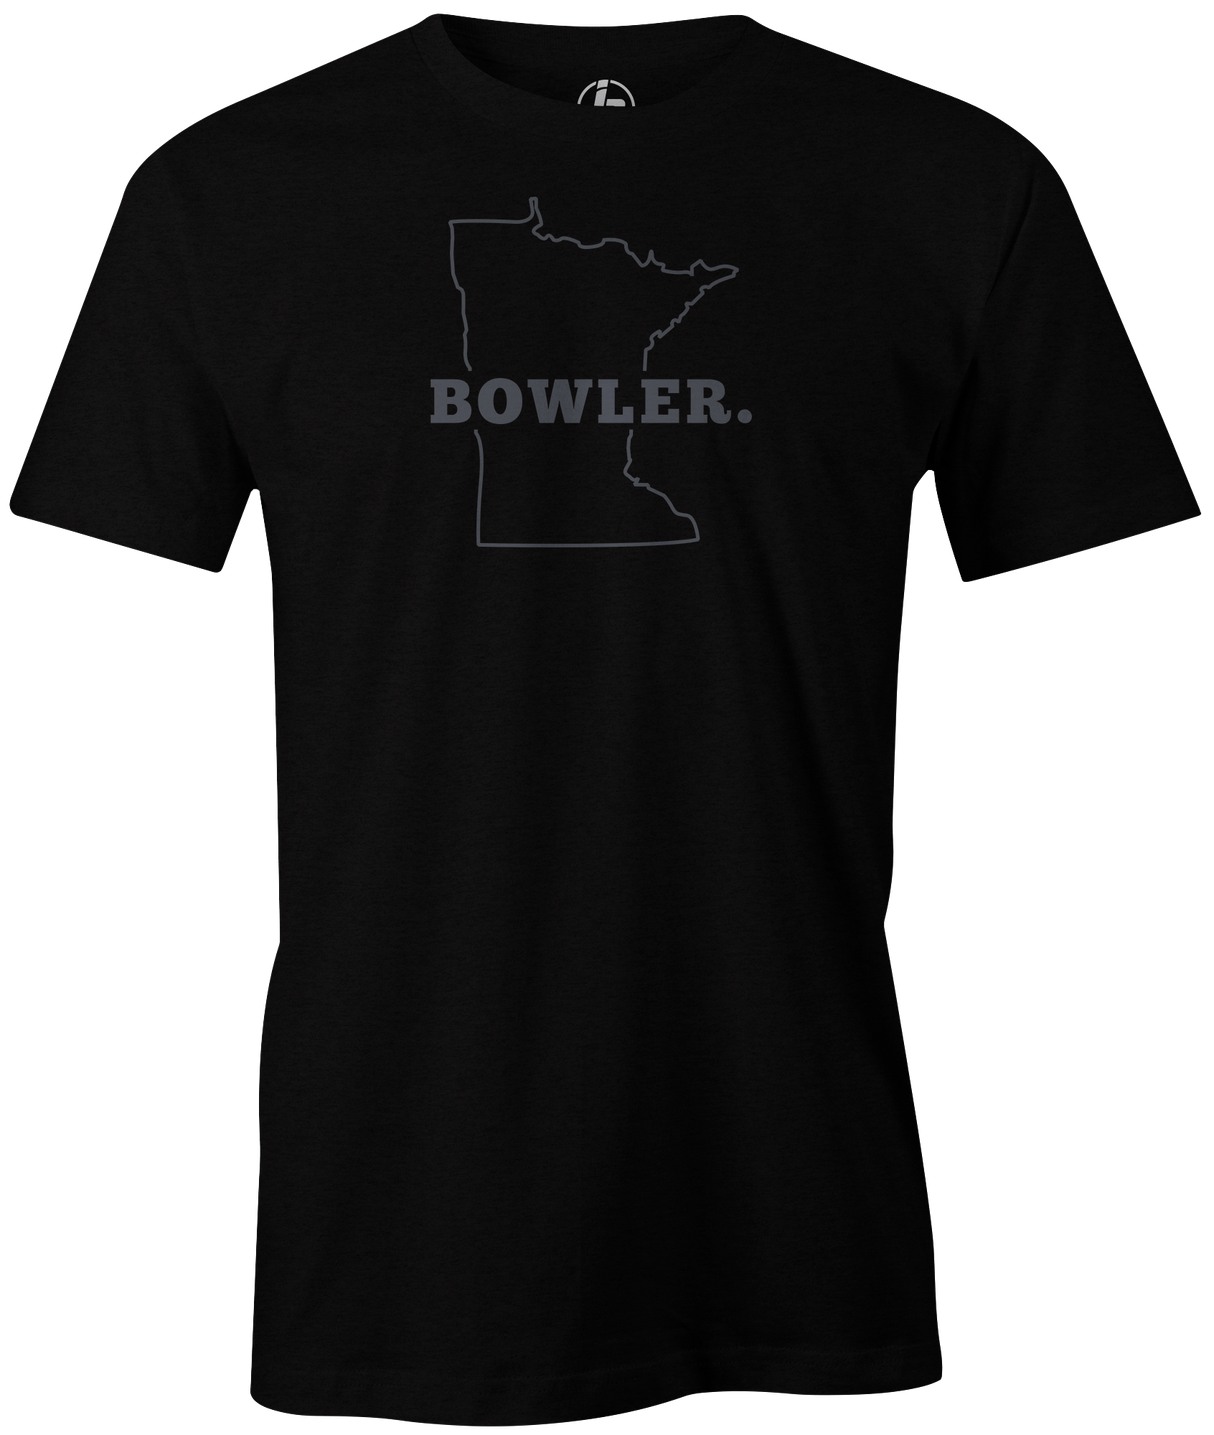 Minnesota State Men's Bowling T-shirt, Black, Cool, novelty, tshirt, tee, tee-shirt, tee shirt, teeshirt, team, comfortable